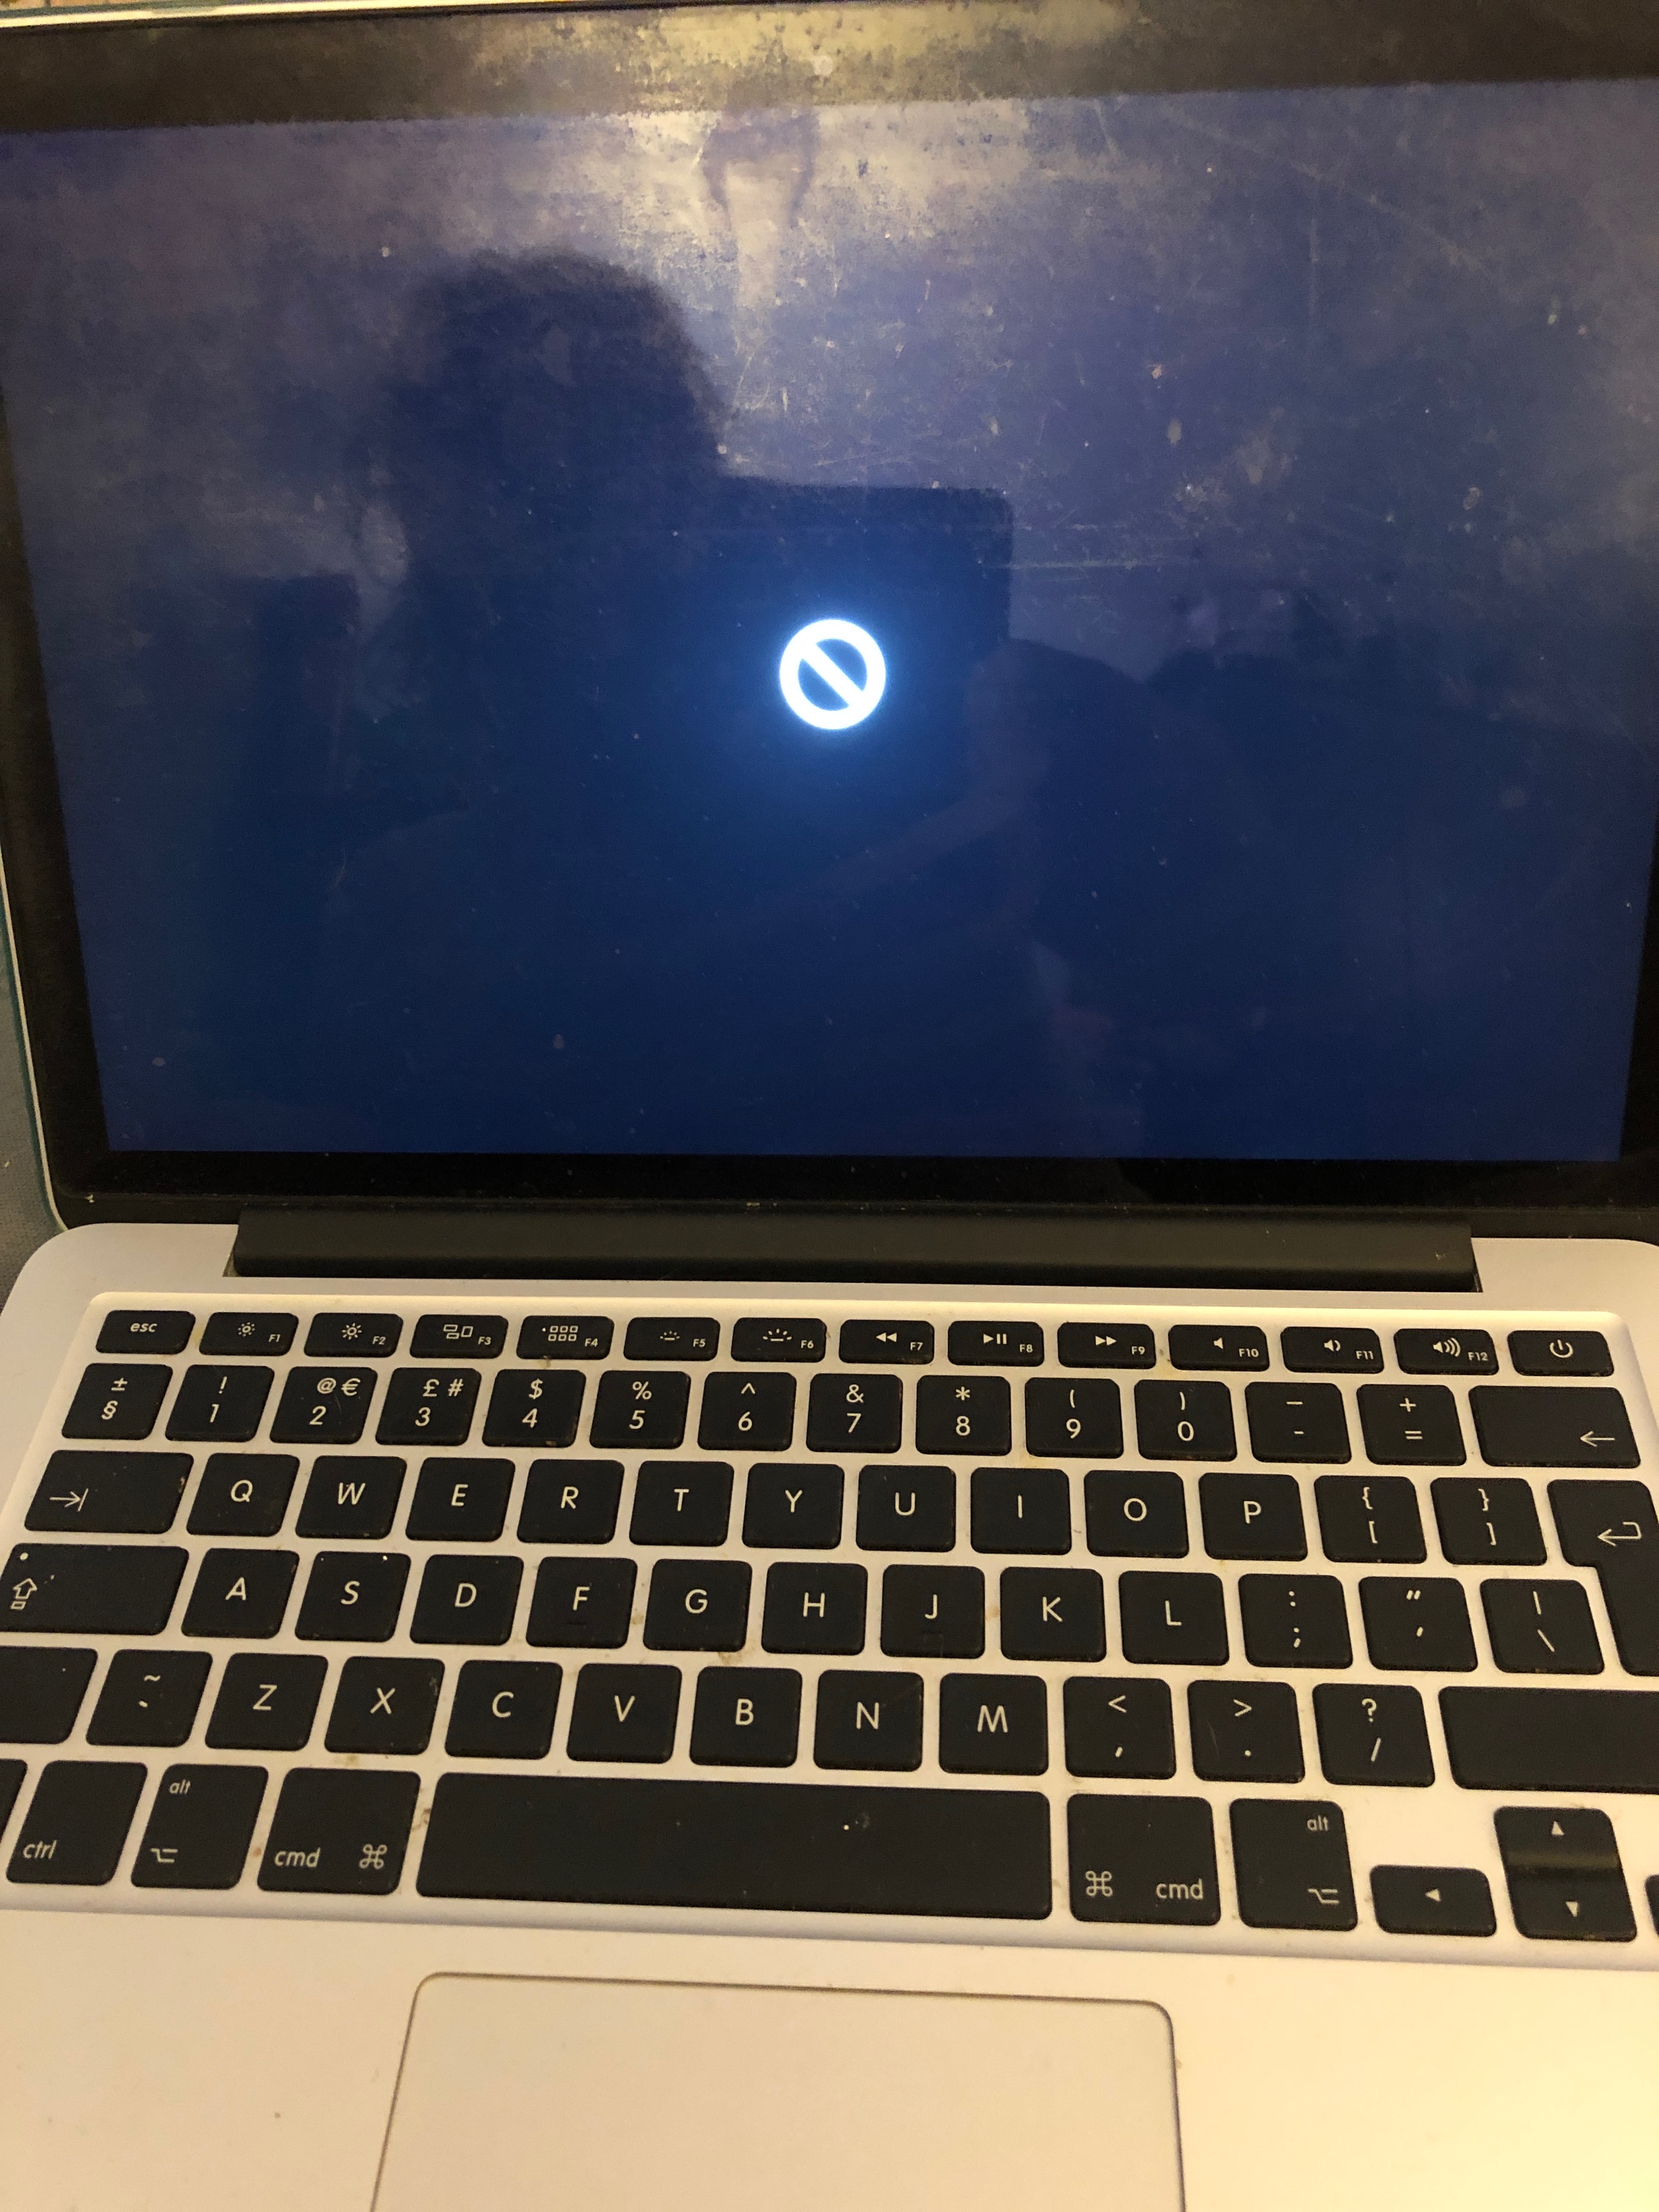 Restoring my MacBook Pro - Apple Community